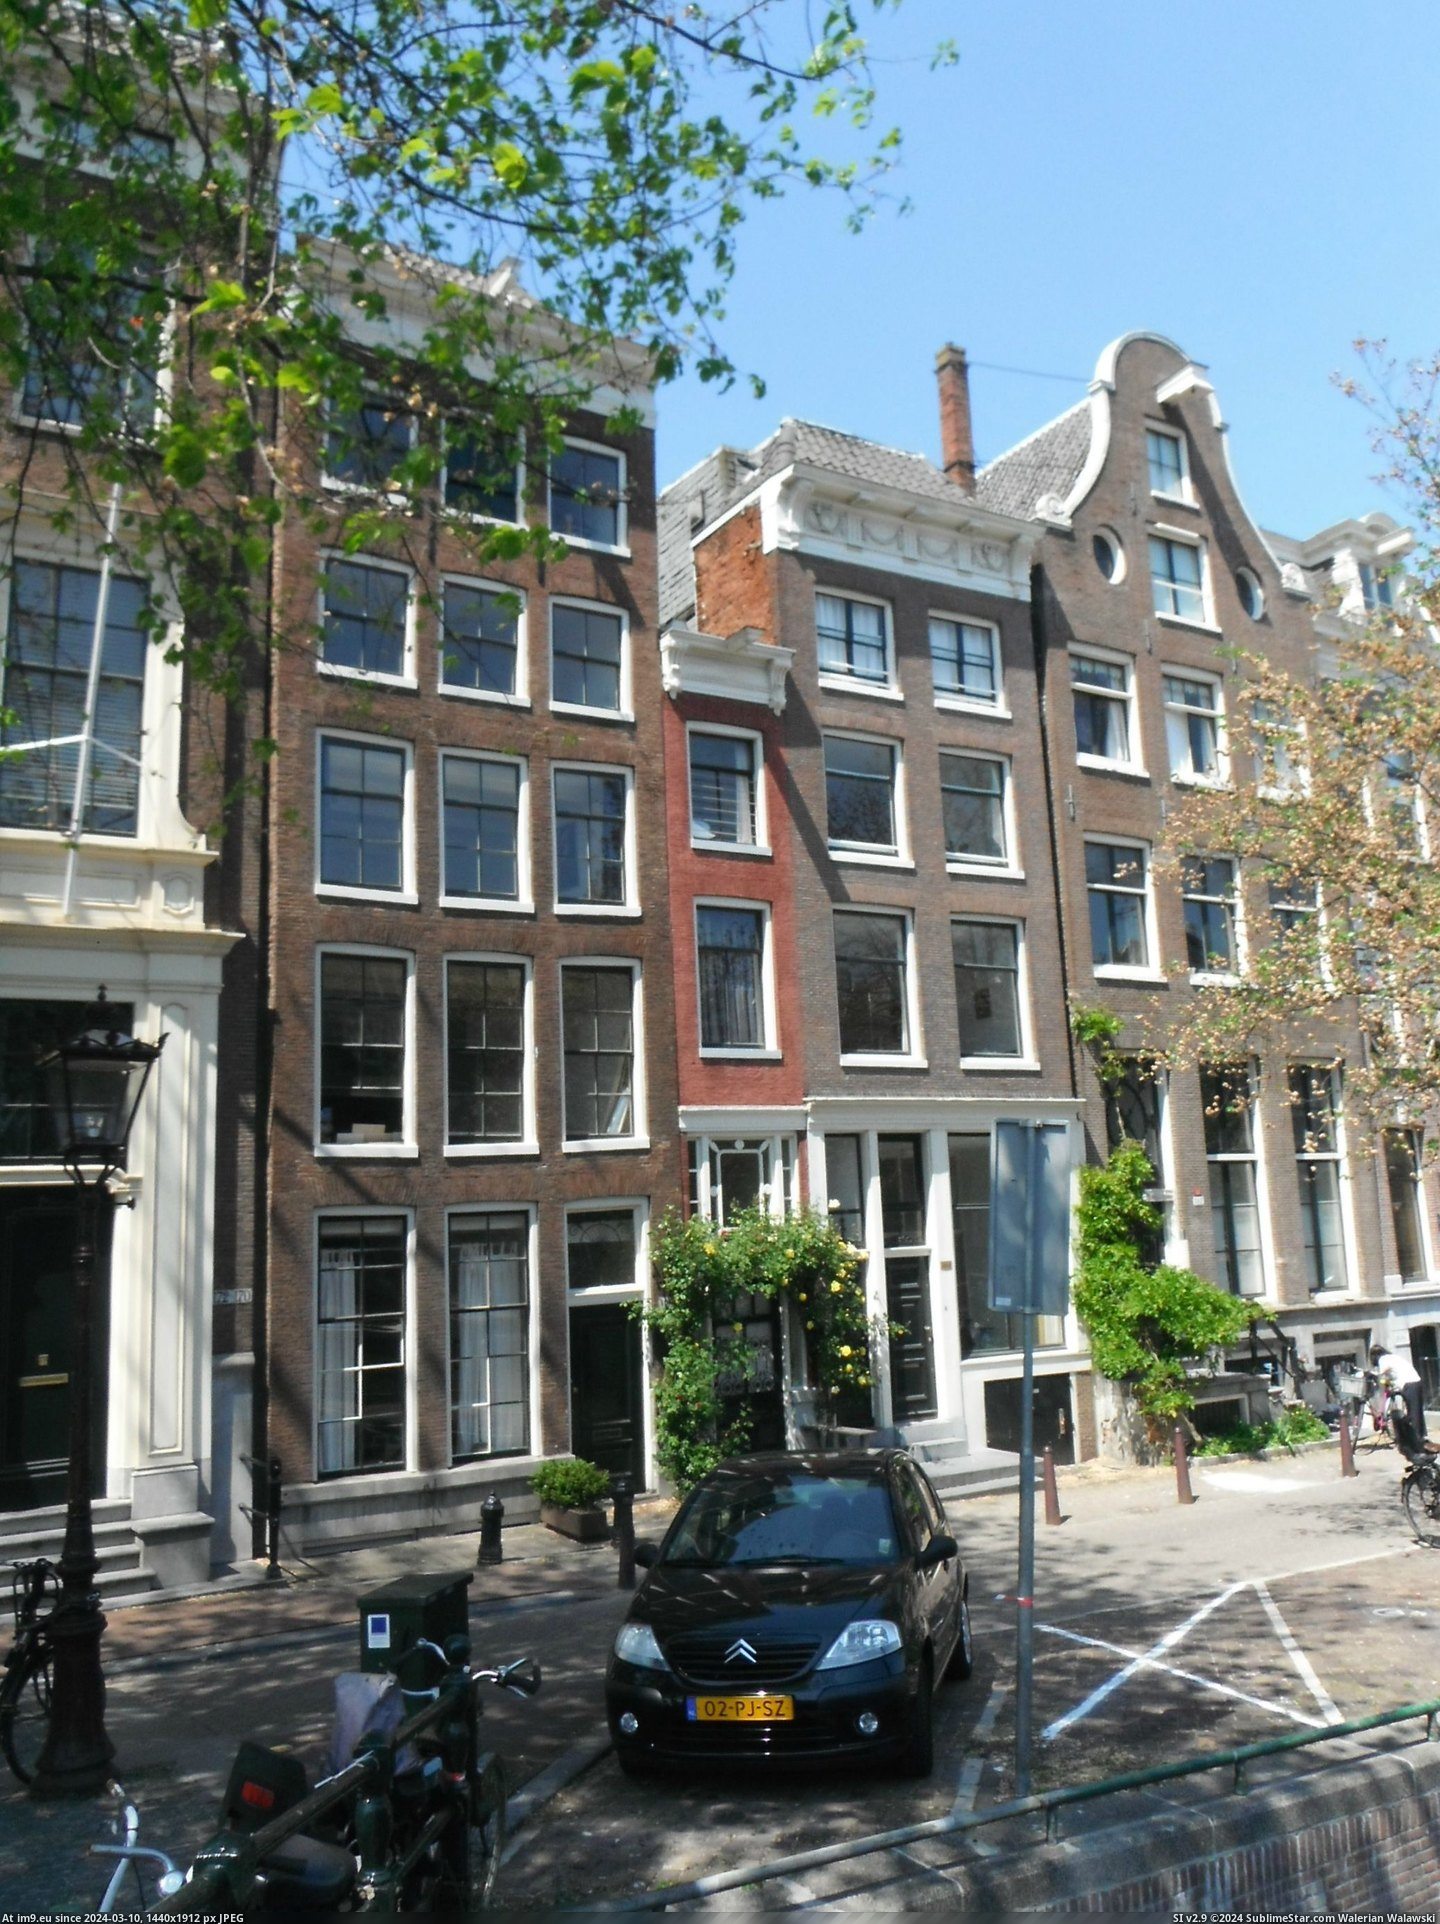 #House #Narrowest #Amsterdam [Mildlyinteresting] The narrowest house in Amsterdam Pic. (Изображение из альбом My r/MILDLYINTERESTING favs))